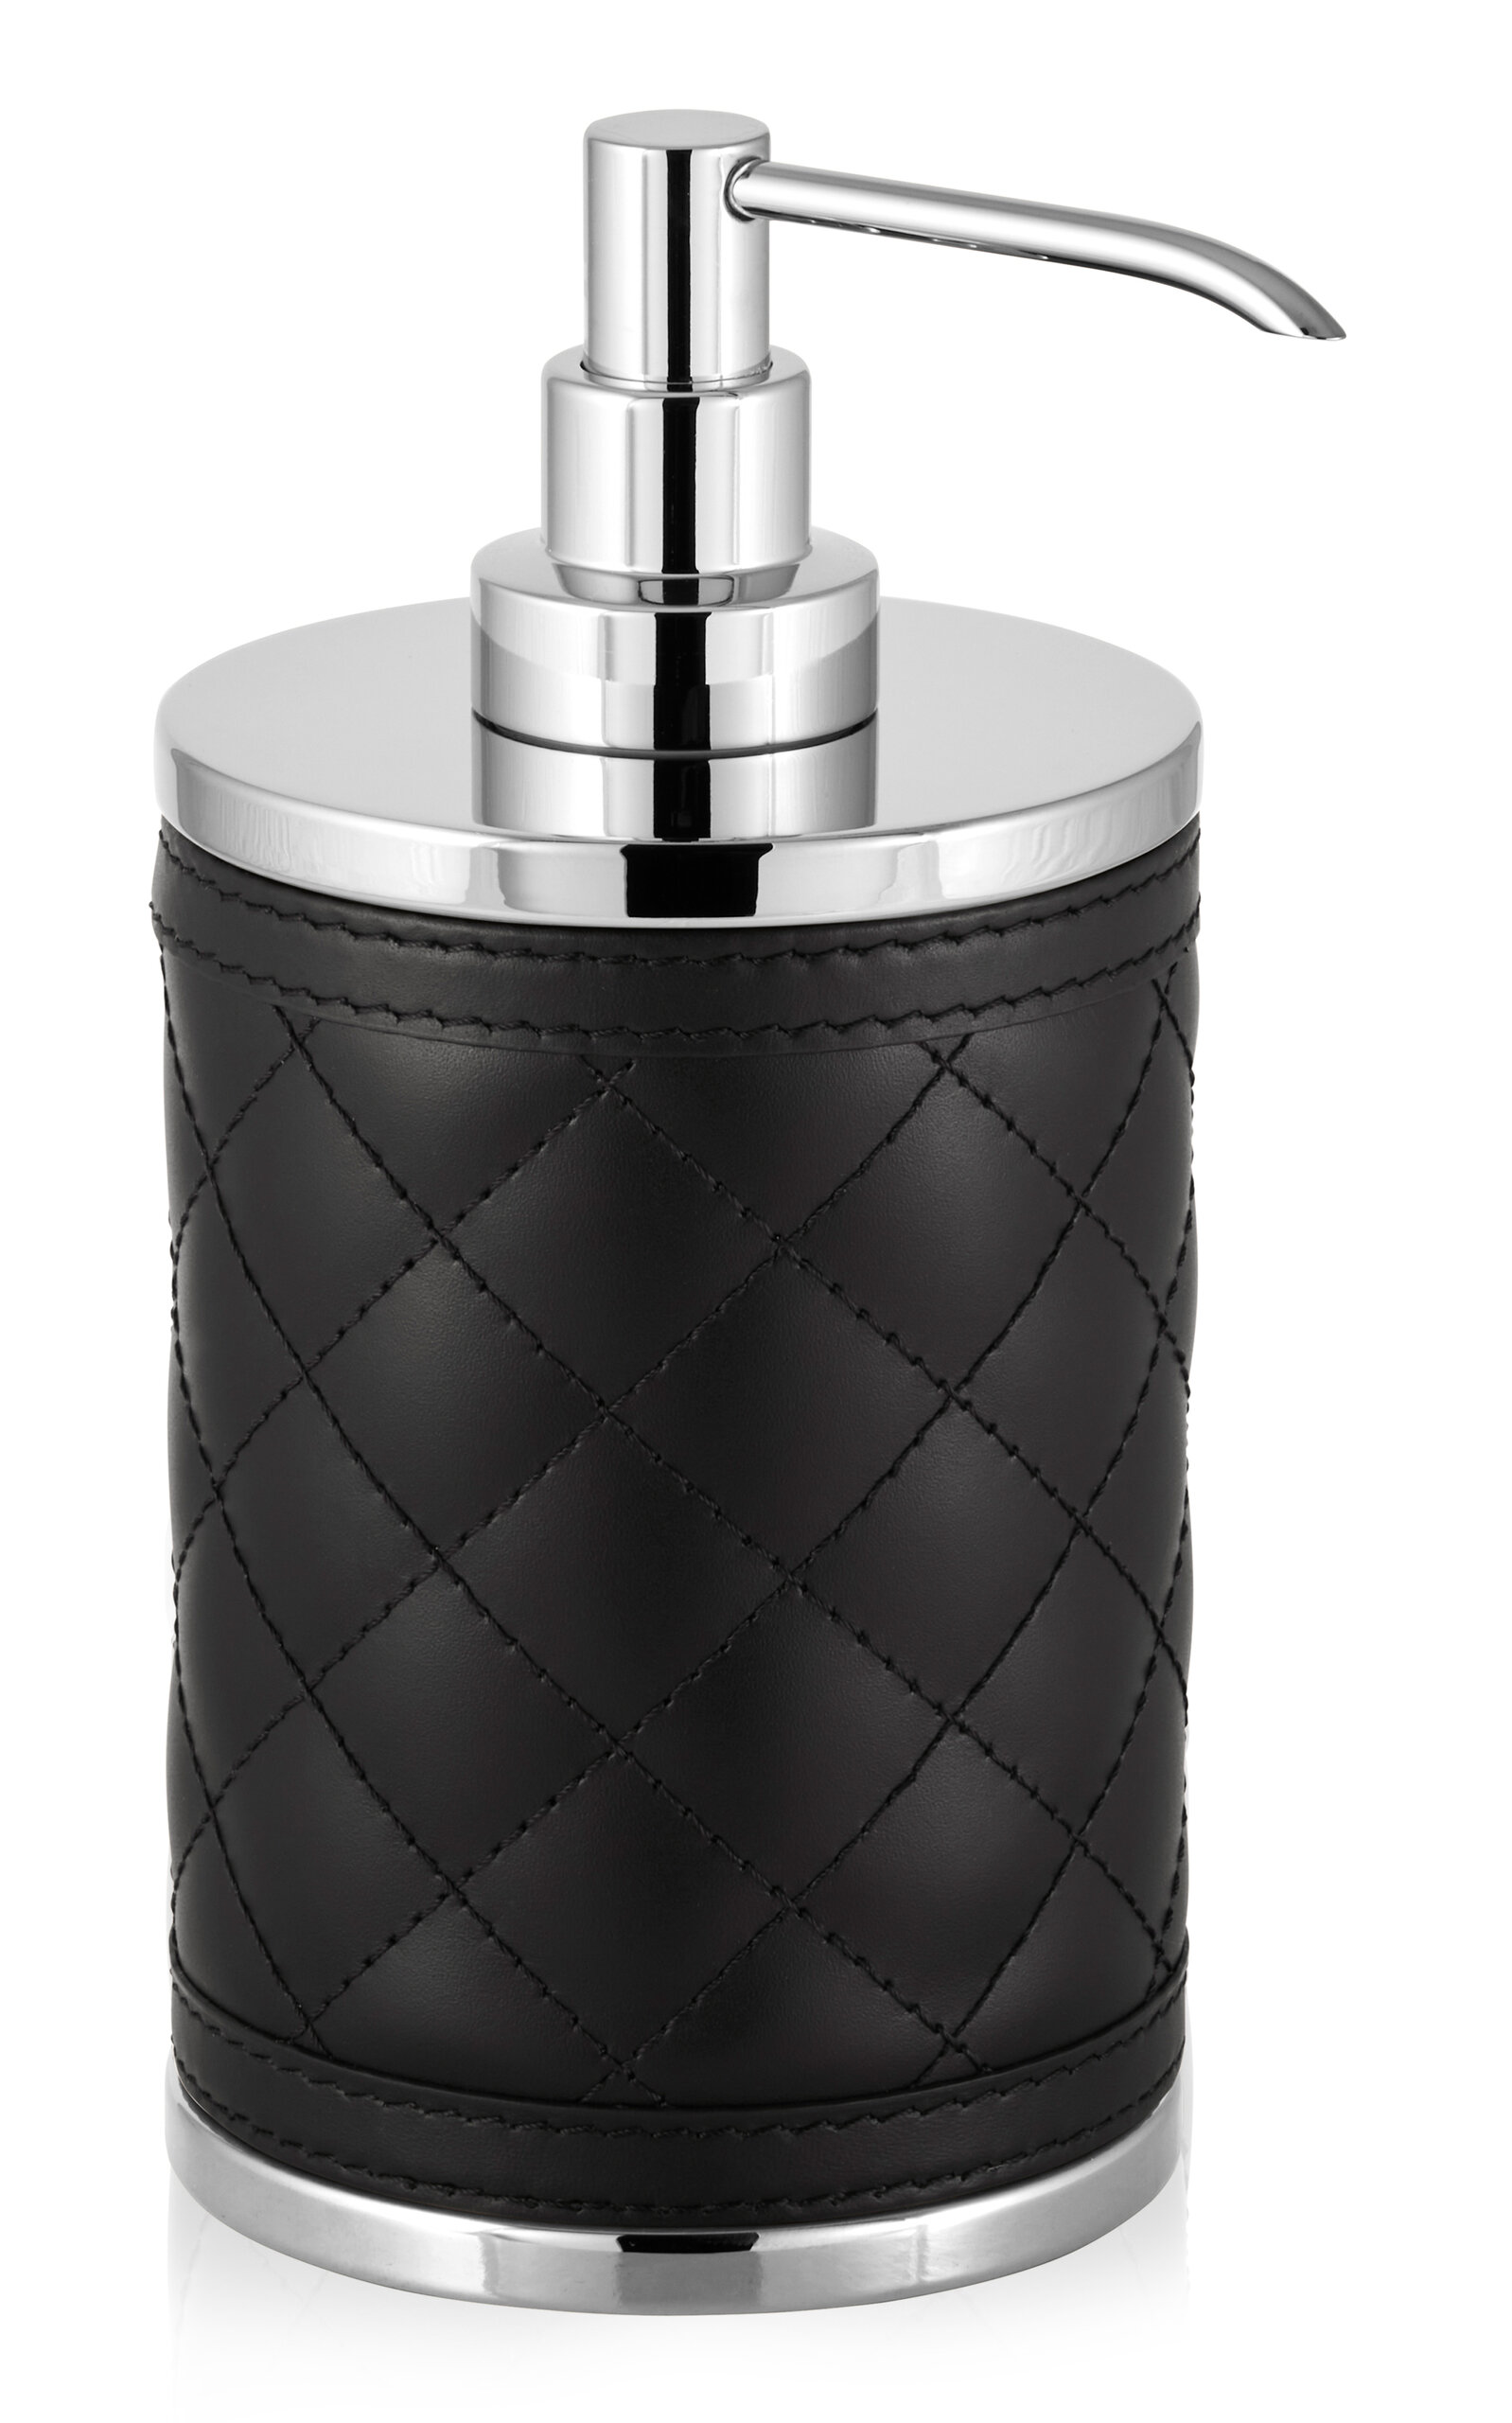 Riviere Alghero Handmade Diamond Leather Soap Dispenser In Black